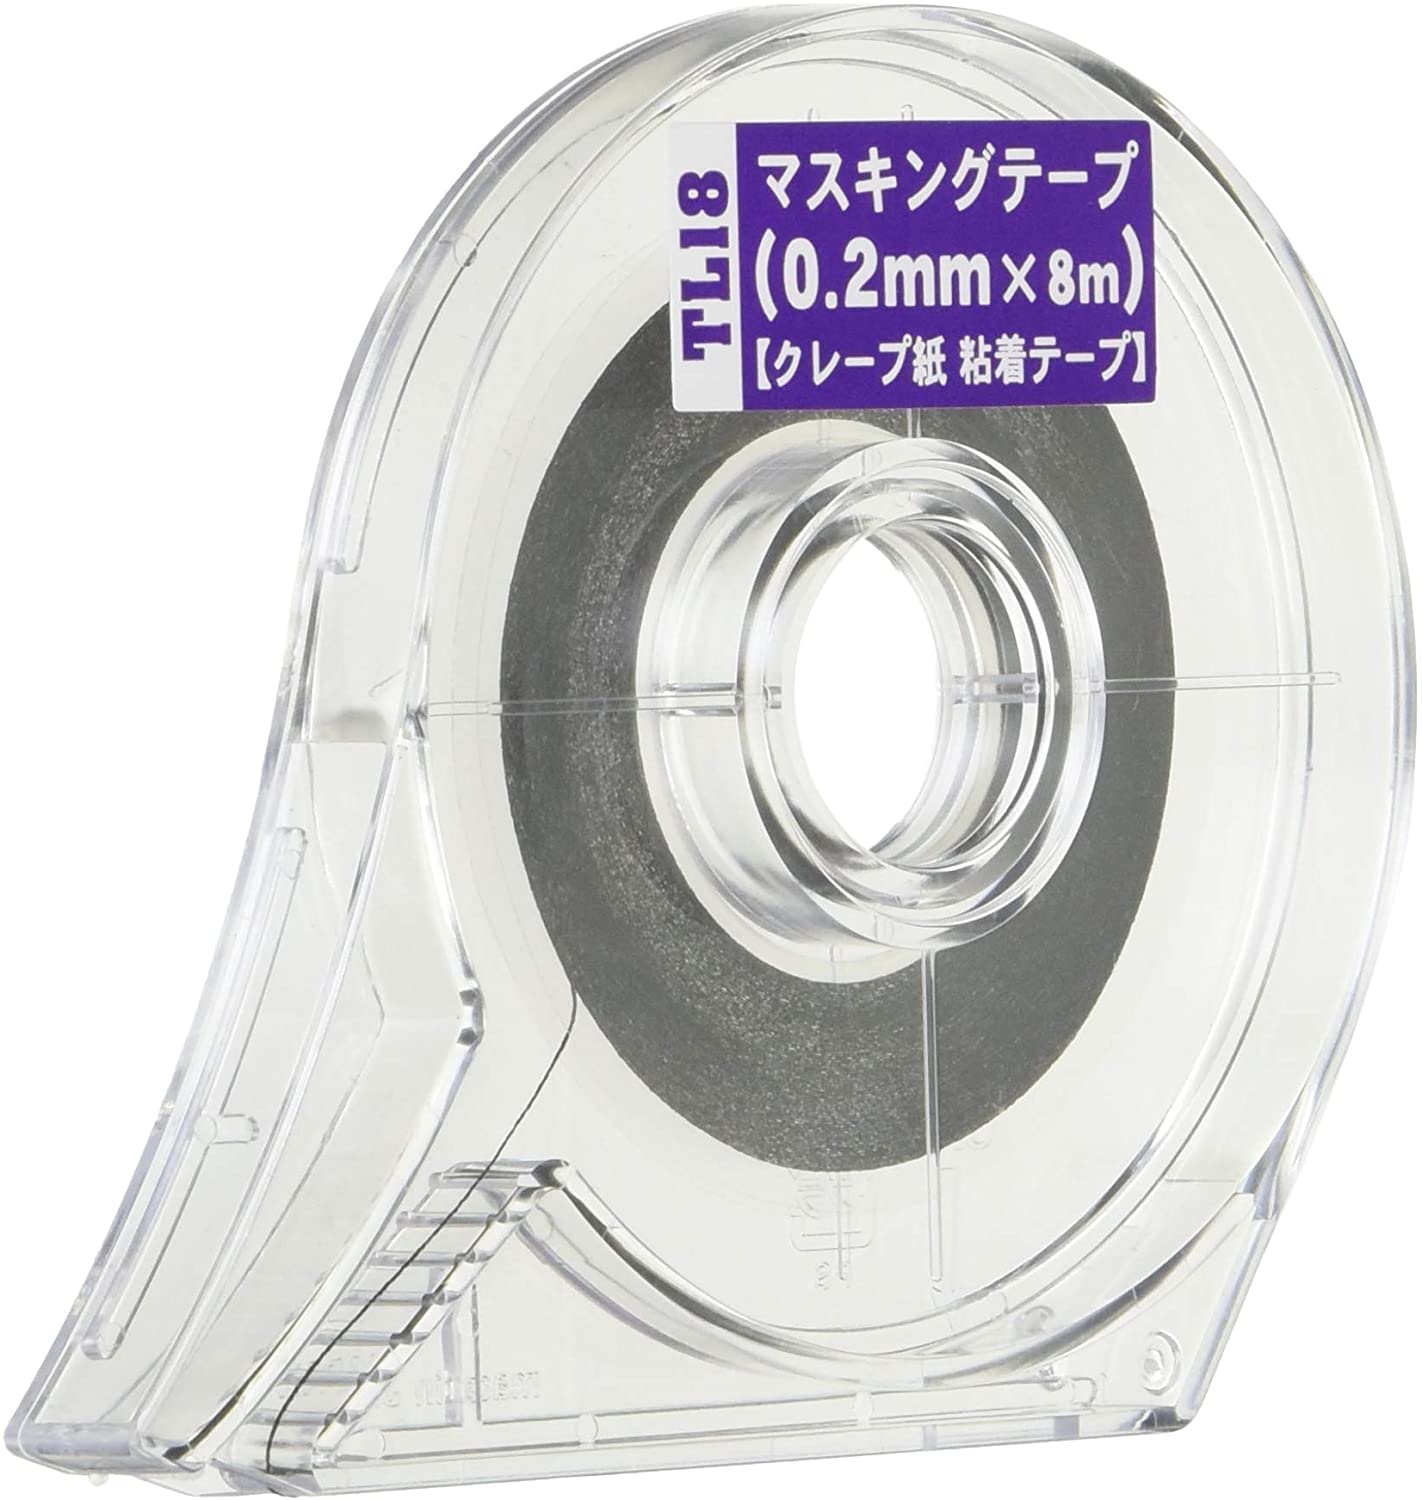 Masking Tape (0.2mm x 8m)